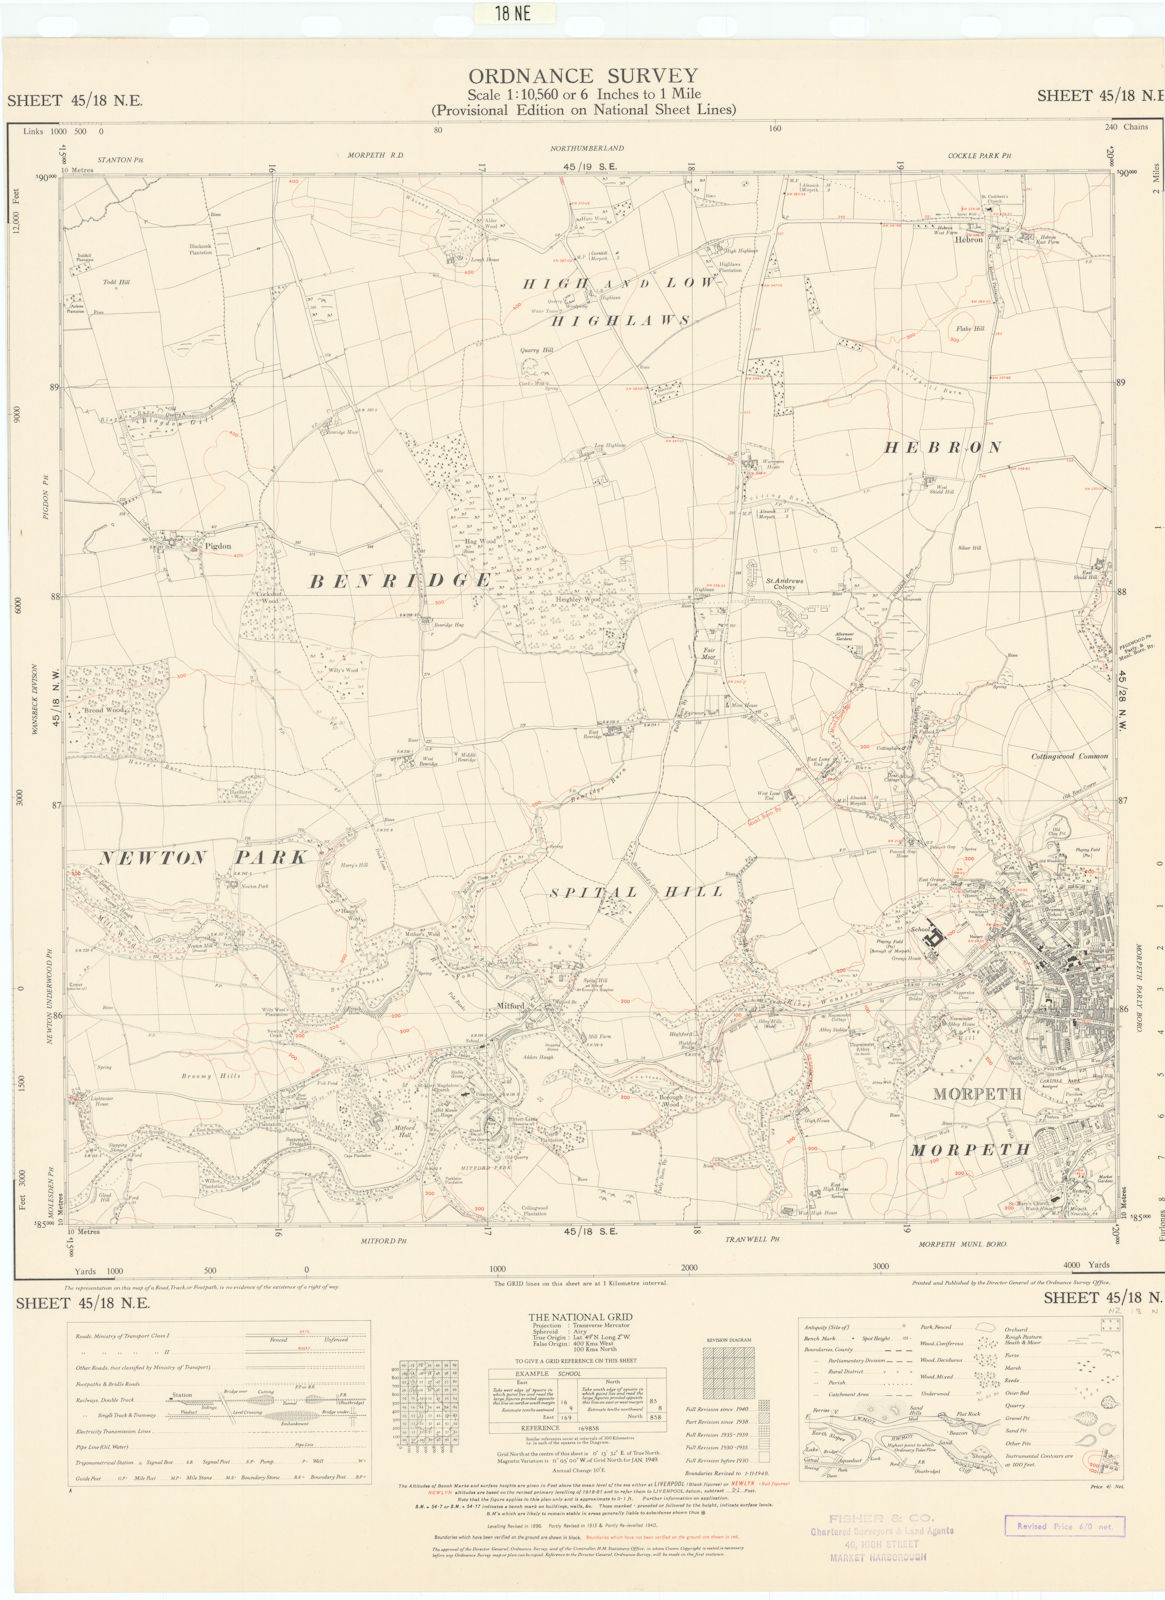 Ordnance Survey Sheet 45/18 N.E. Northumberland Morphet Mitford Hebron 1948 map